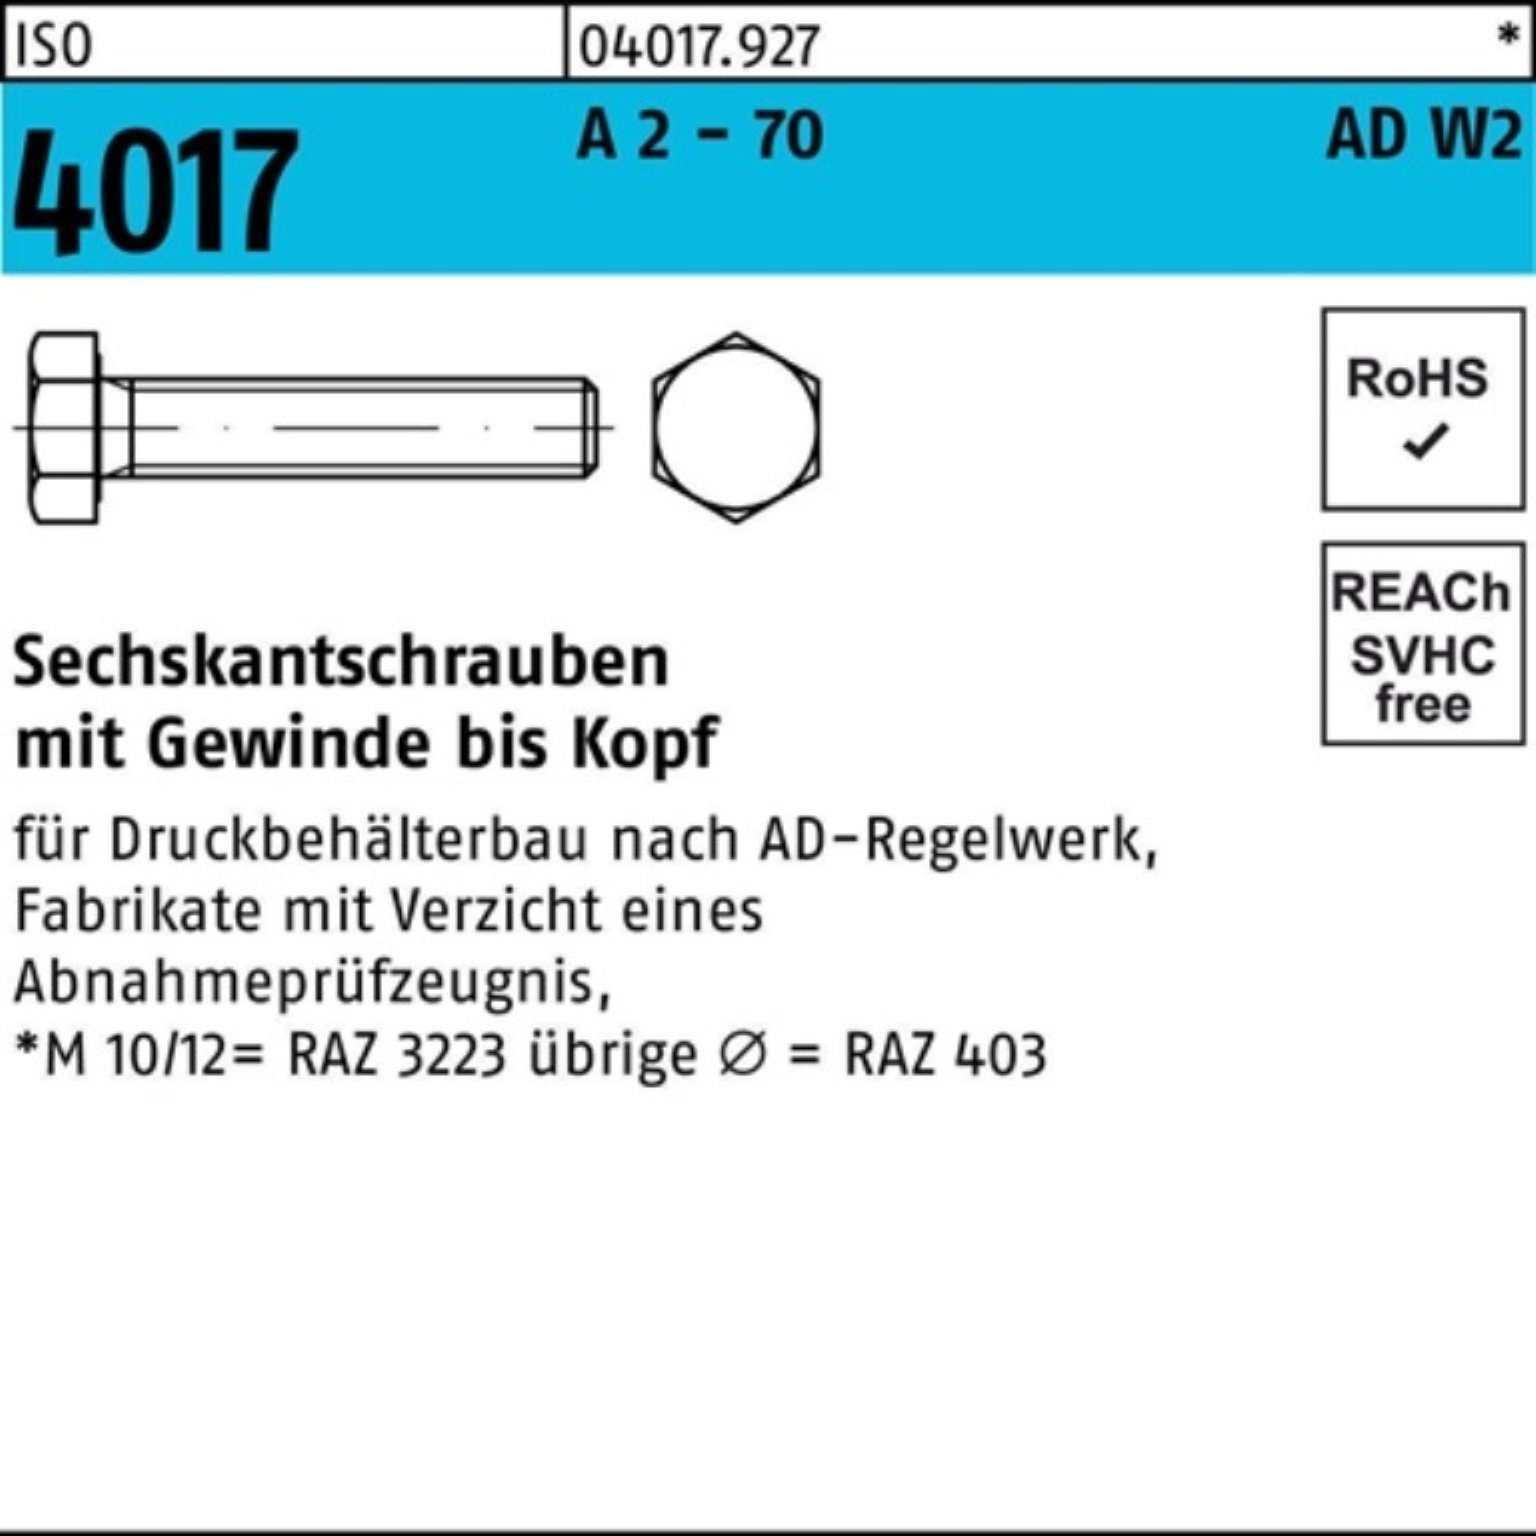 Bufab Sechskantschraube A 2 25 Pack AD-W2 4017 100er M16x Sechskantschraube ISO 65 VG - 70 St